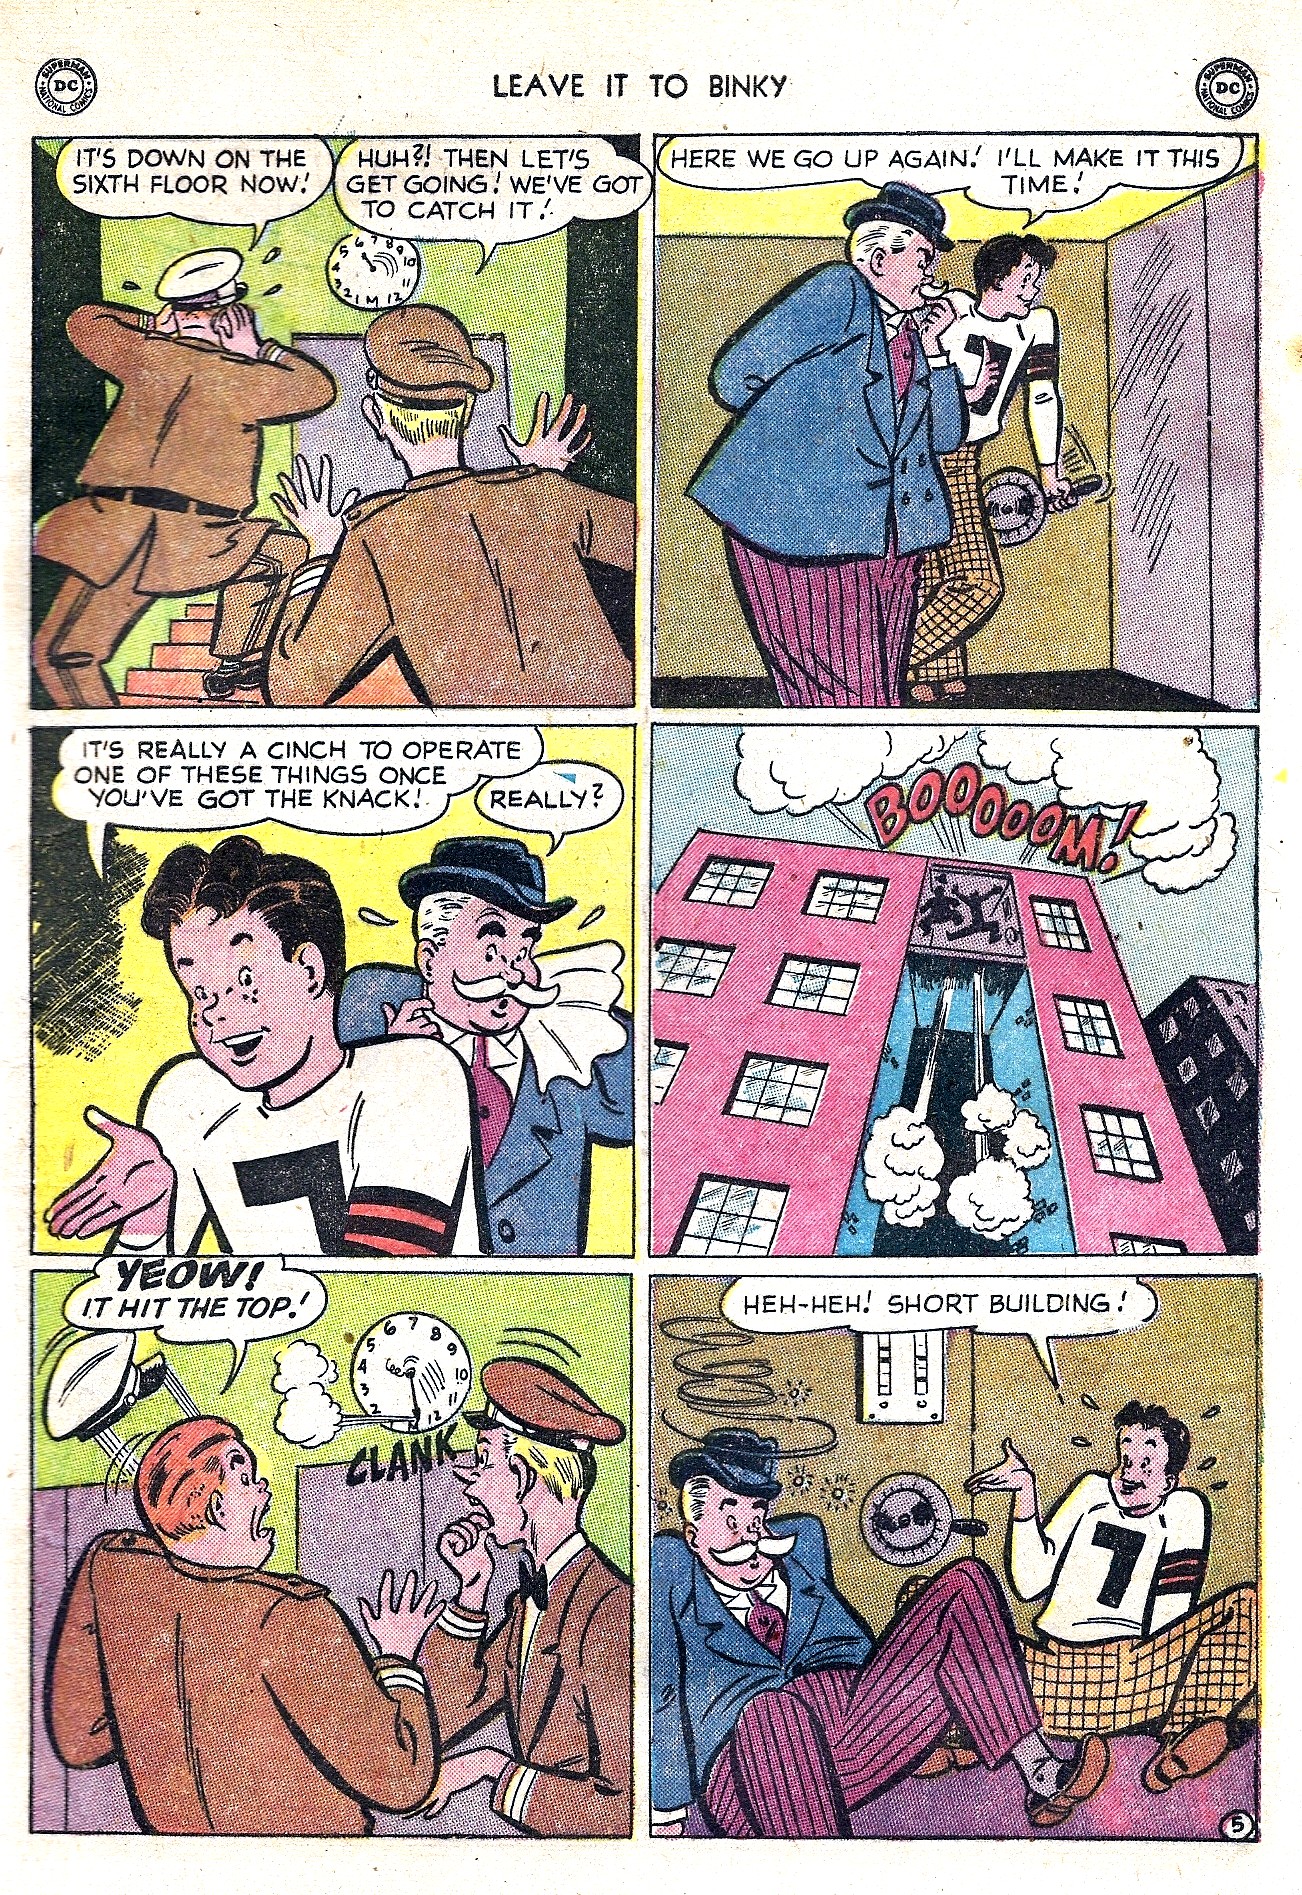 Read online Leave it to Binky comic -  Issue #16 - 7